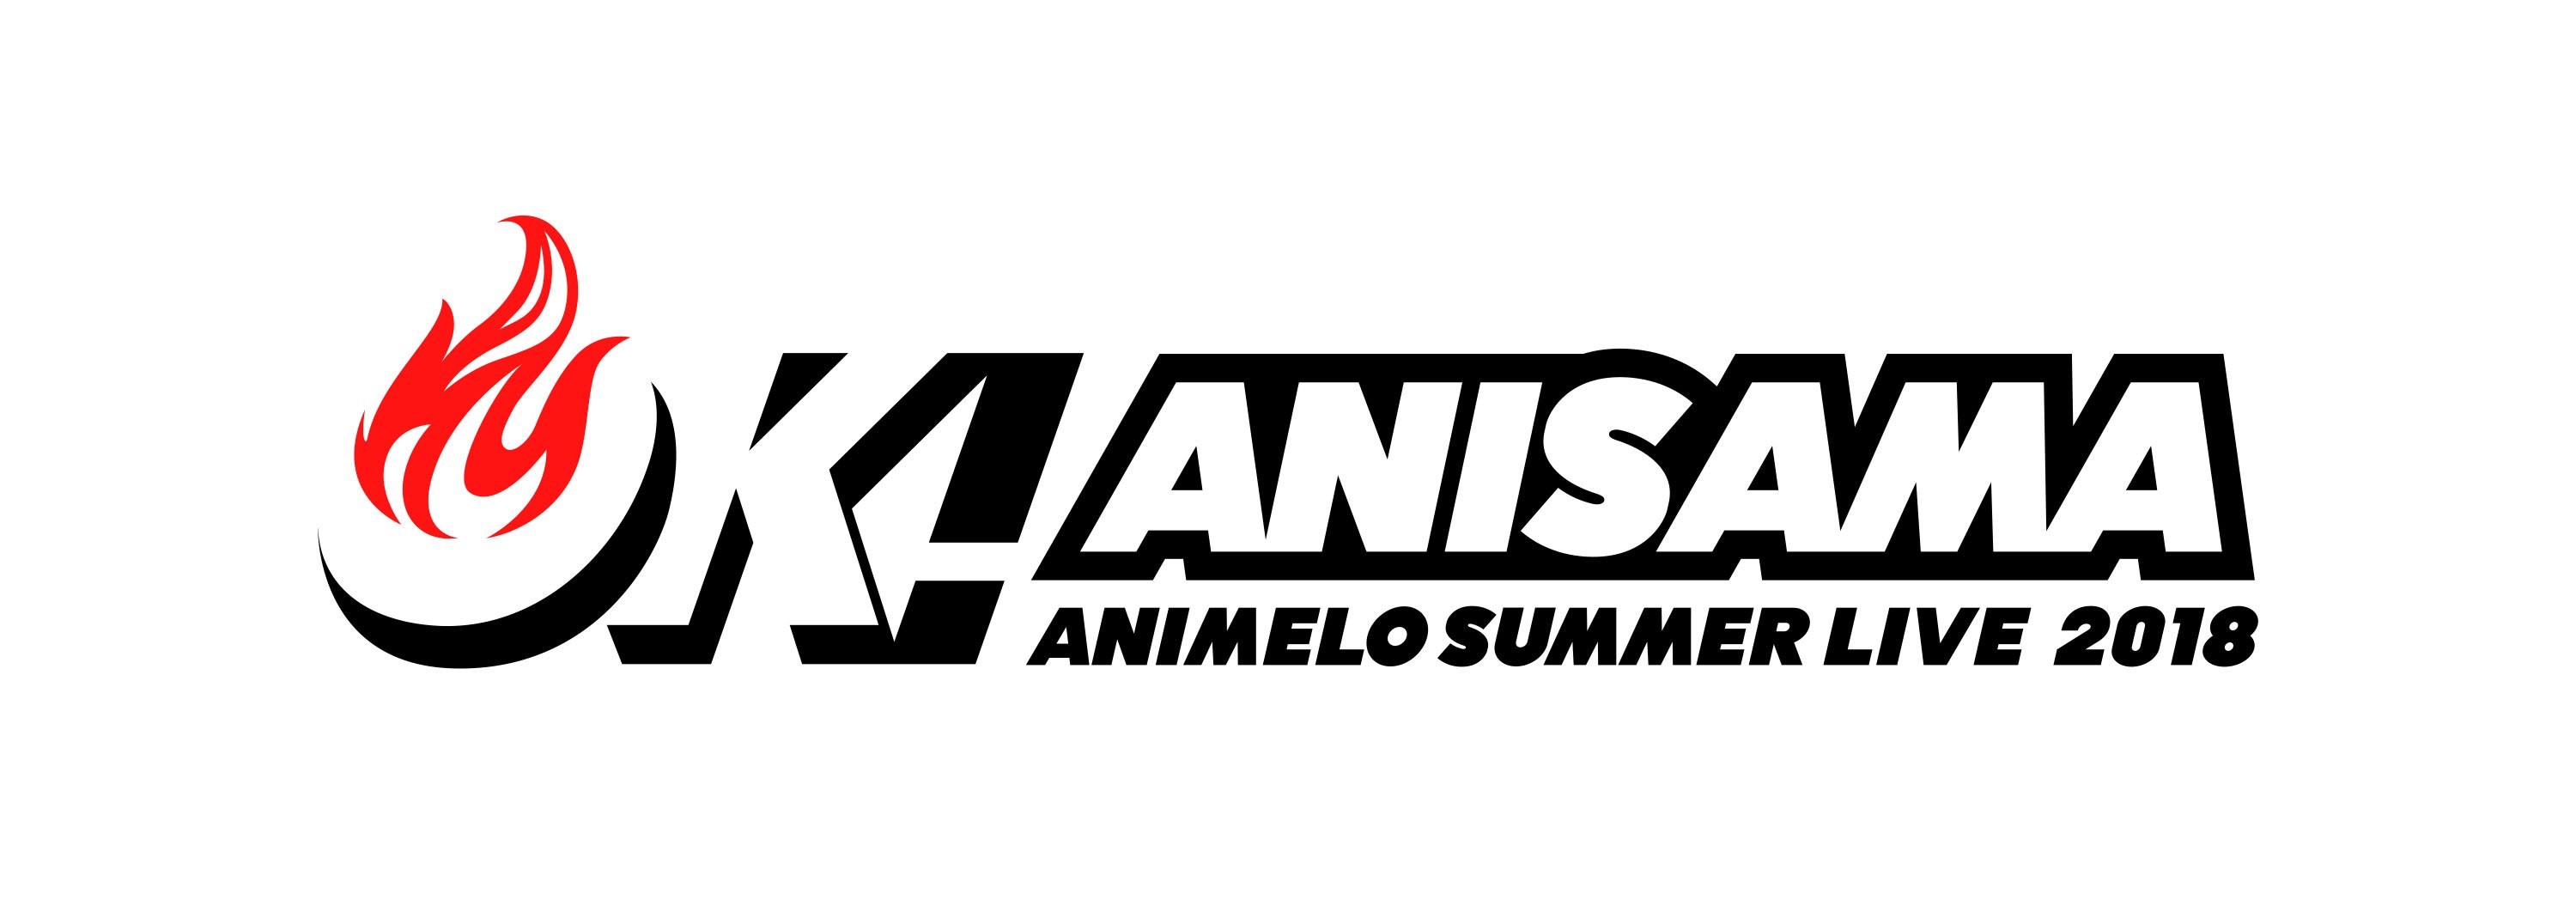 『Animelo Summer Live 2018 “OK!”』(C)Animelo Summer Live 2018/MAGES.